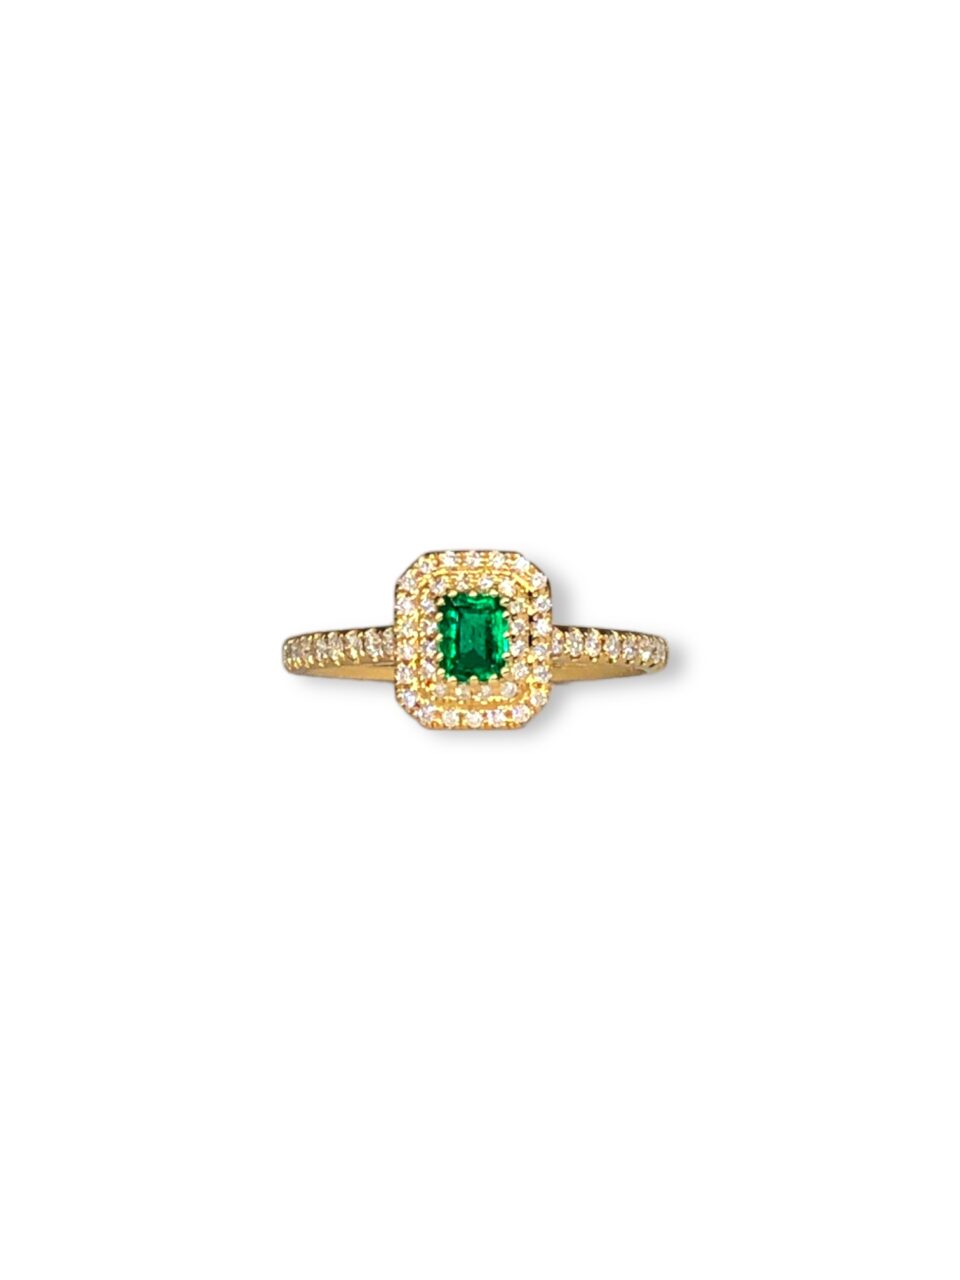 colombian emeralds, muzo emeralds, alpine green, emerald ring, george smith